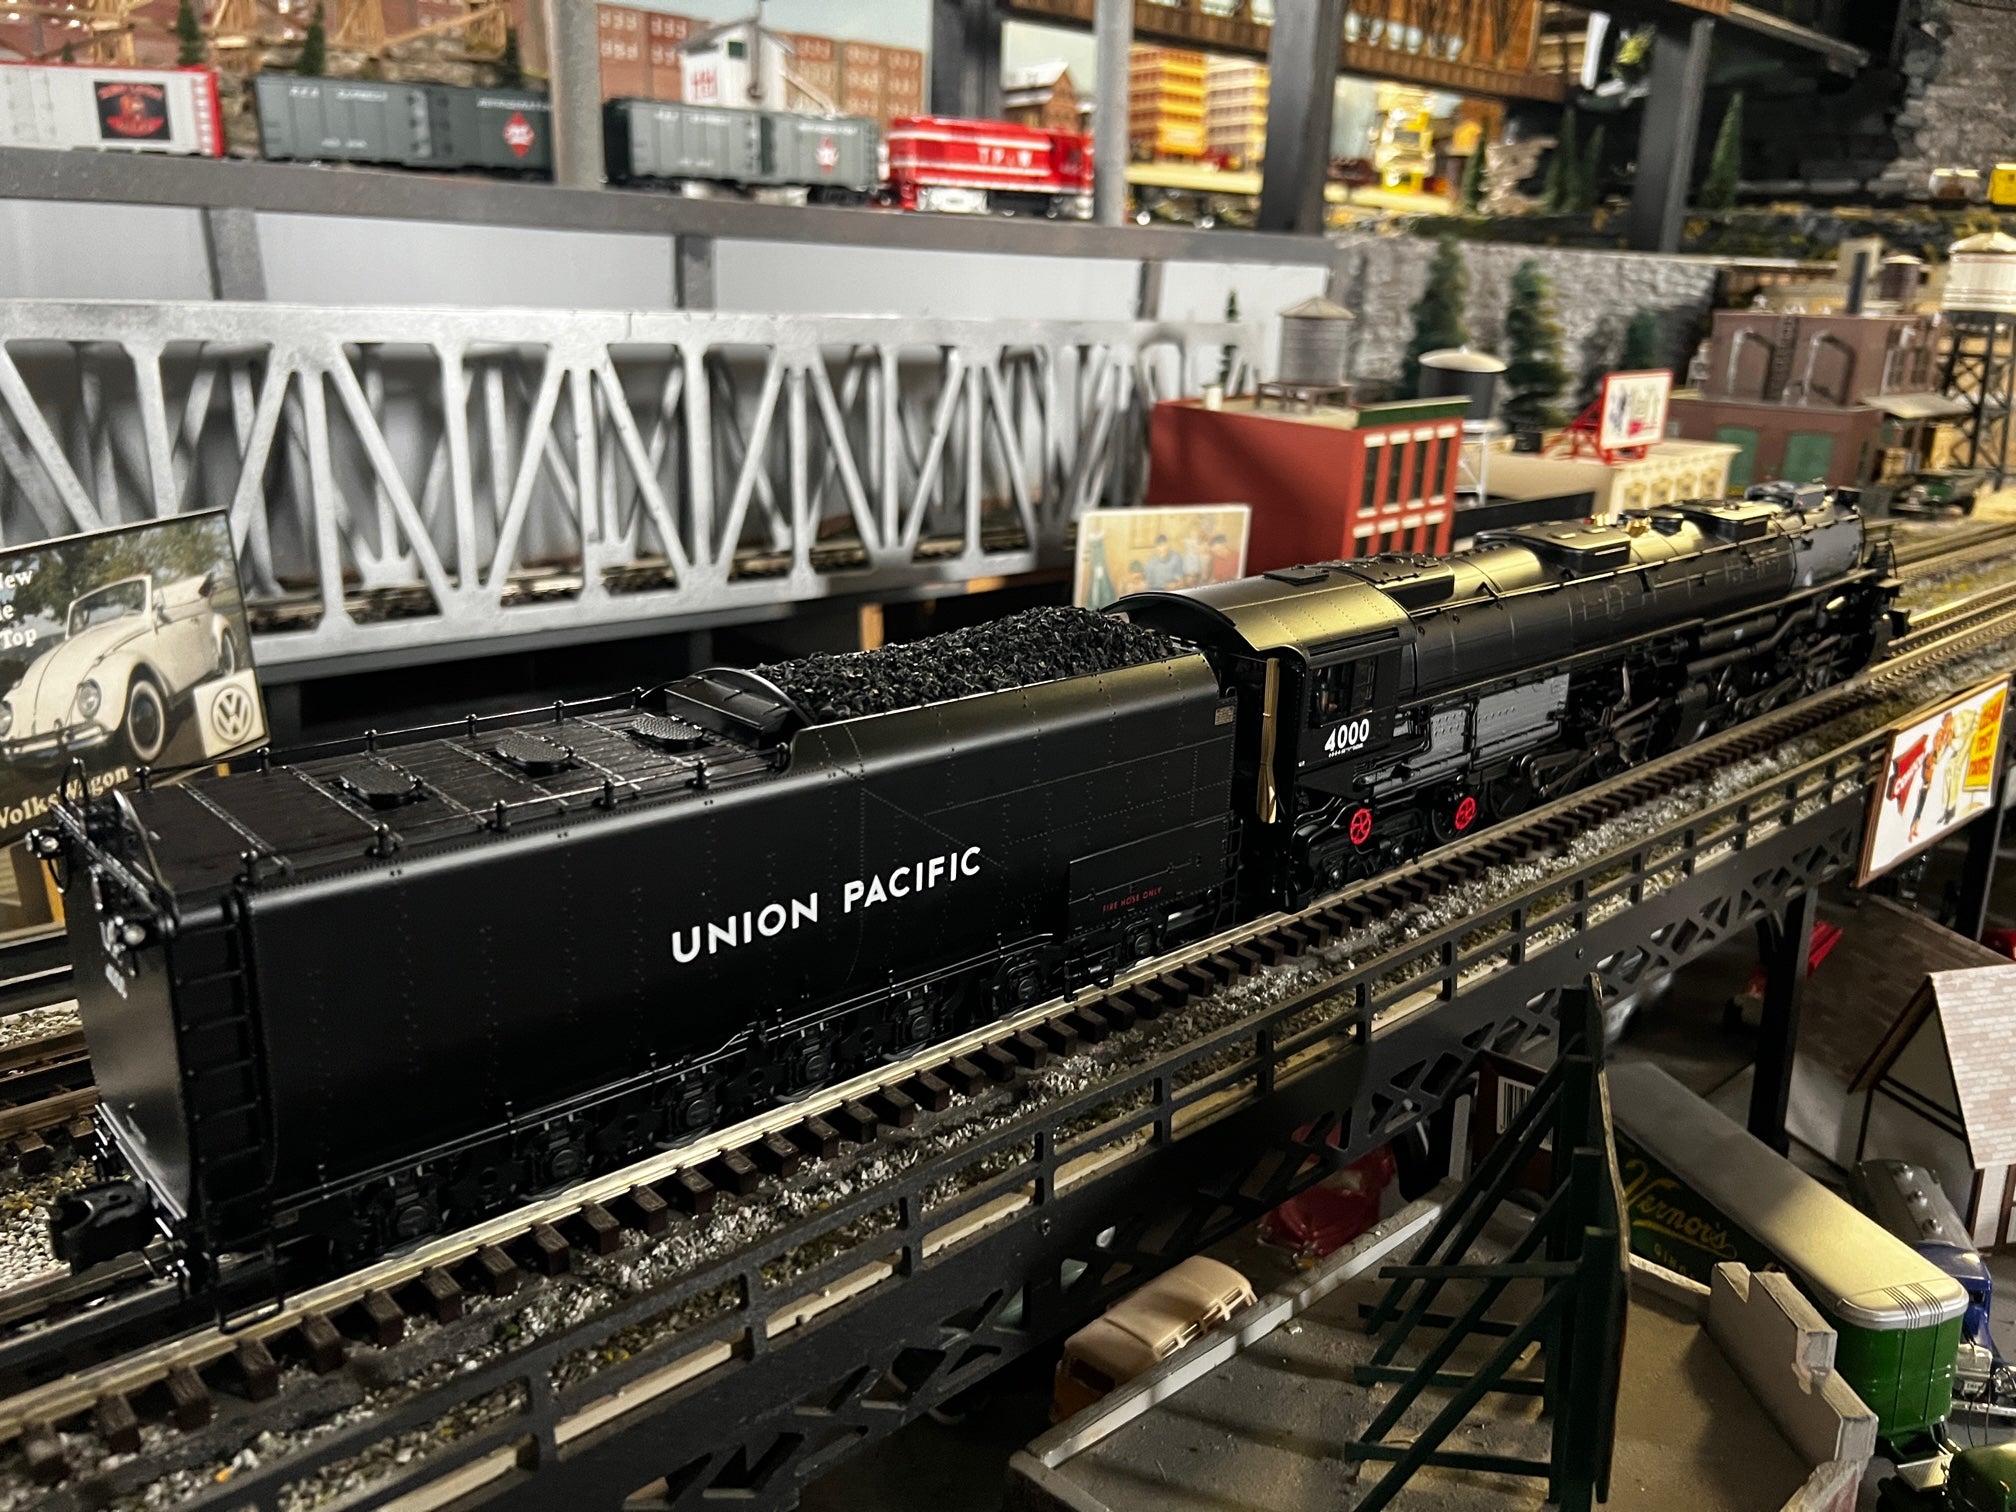 Lionel 2331600 - Vision Line Big Boy Steam Locomotive "Union Pacific" #4000 - Custom Run for MrMuffin'sTrains